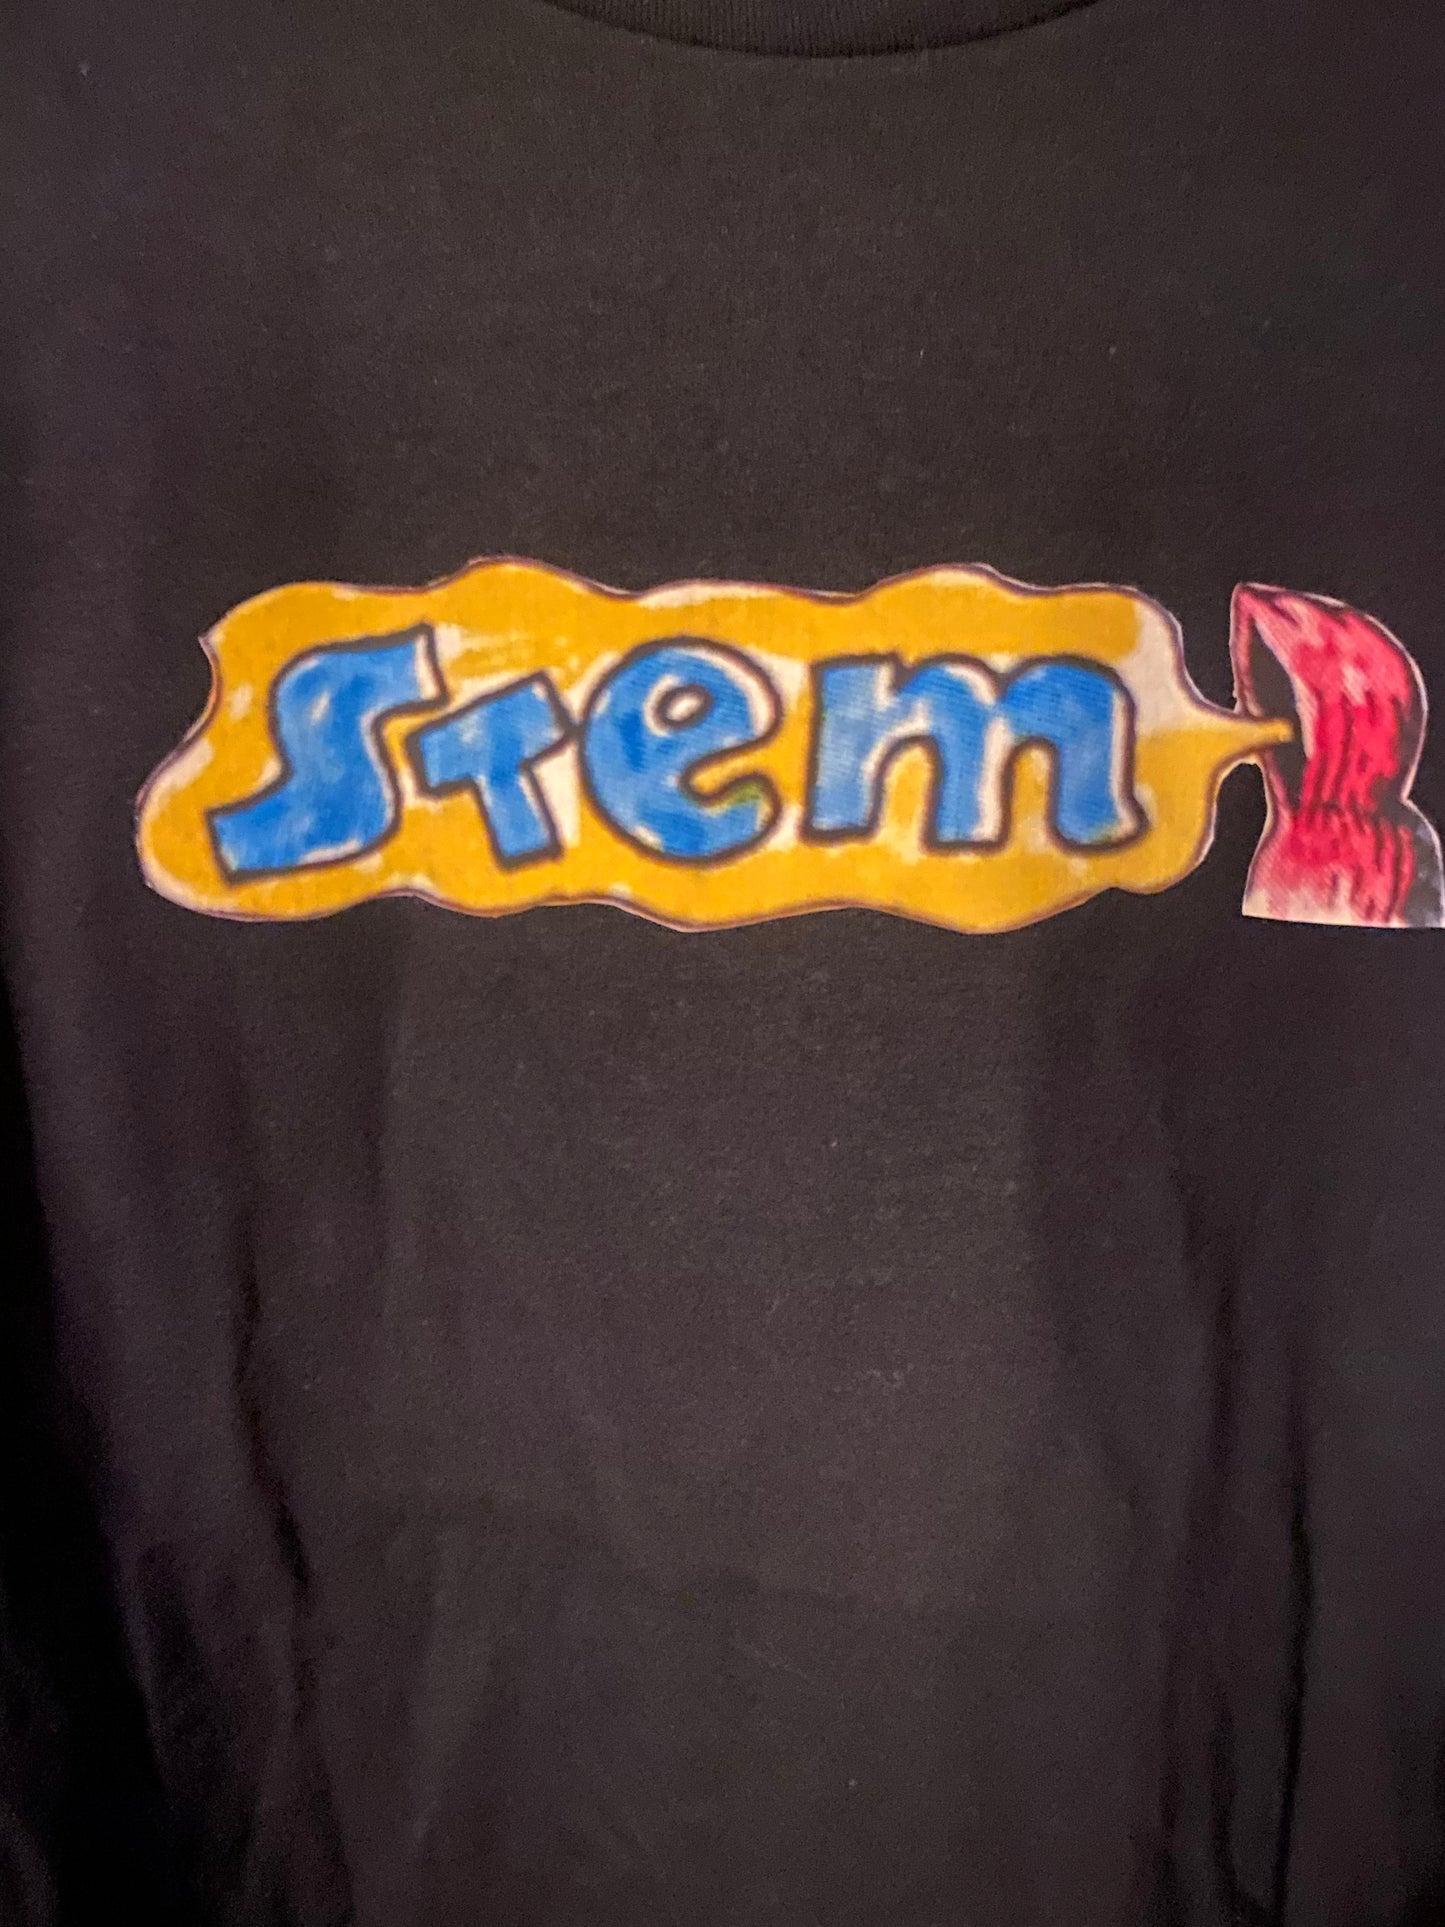 “Stem Pot40” Theme Shirt